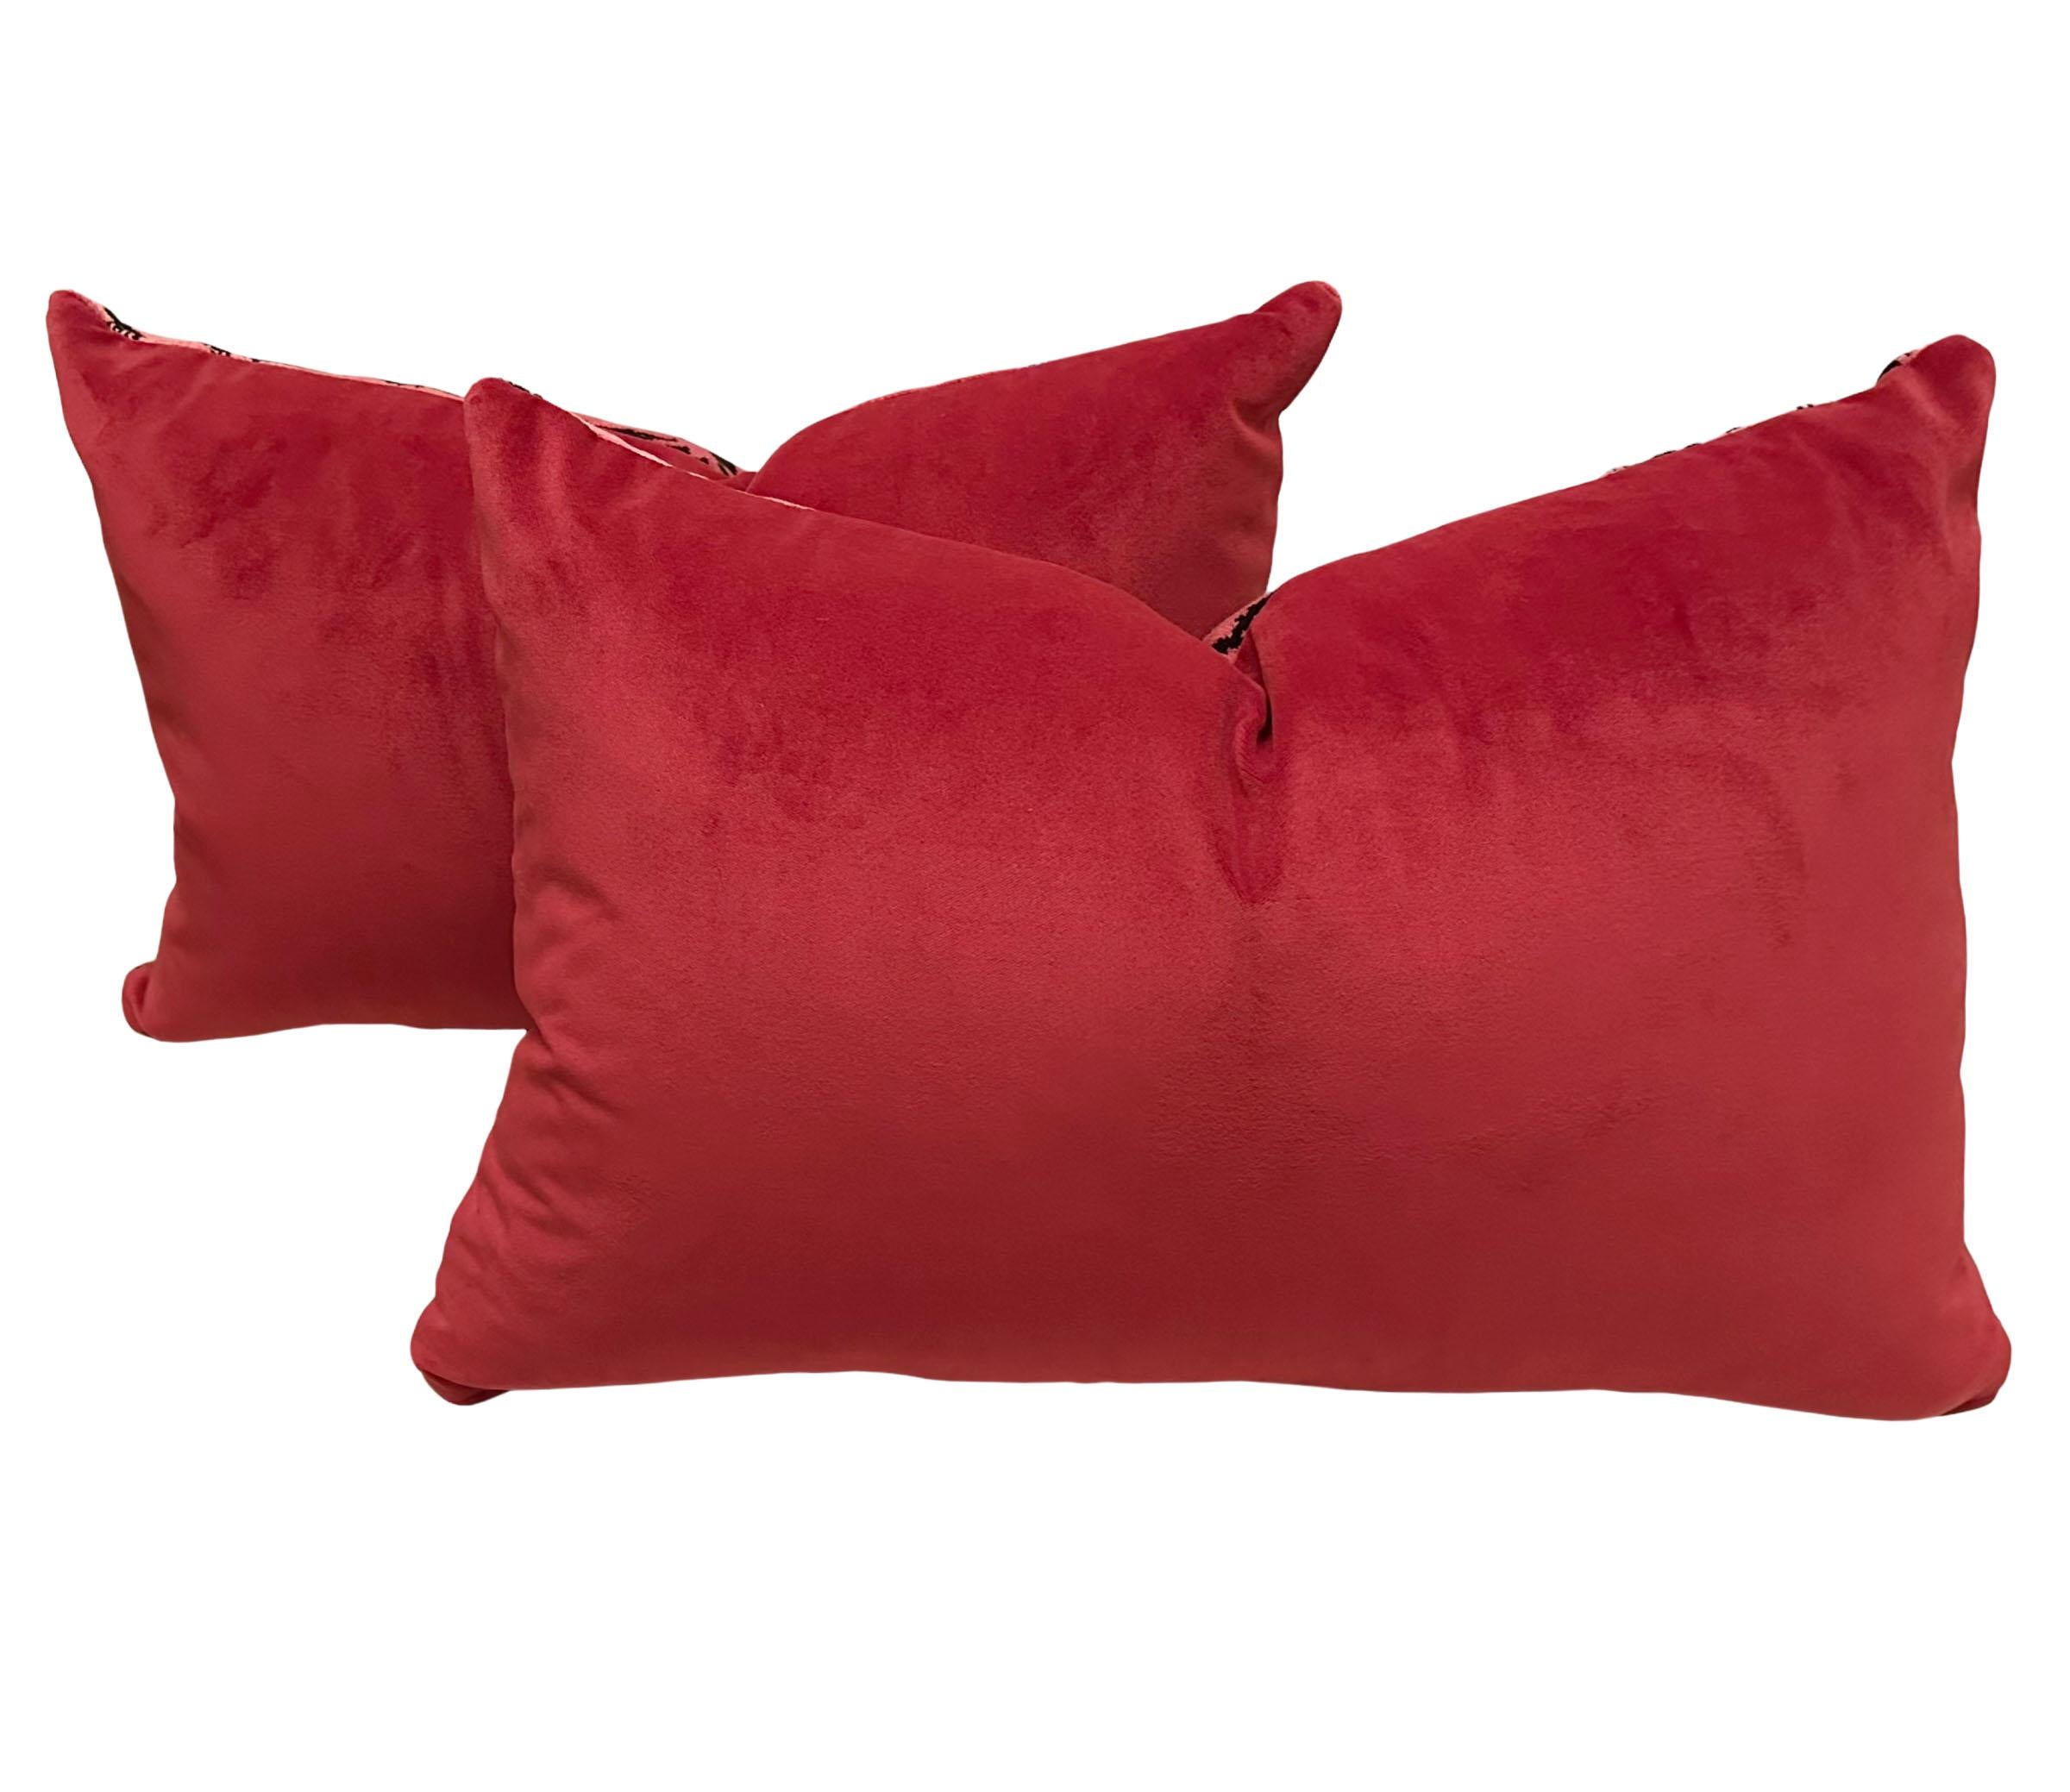 Velvet Scalamandre Pillows in Fuchsia, a Pair For Sale